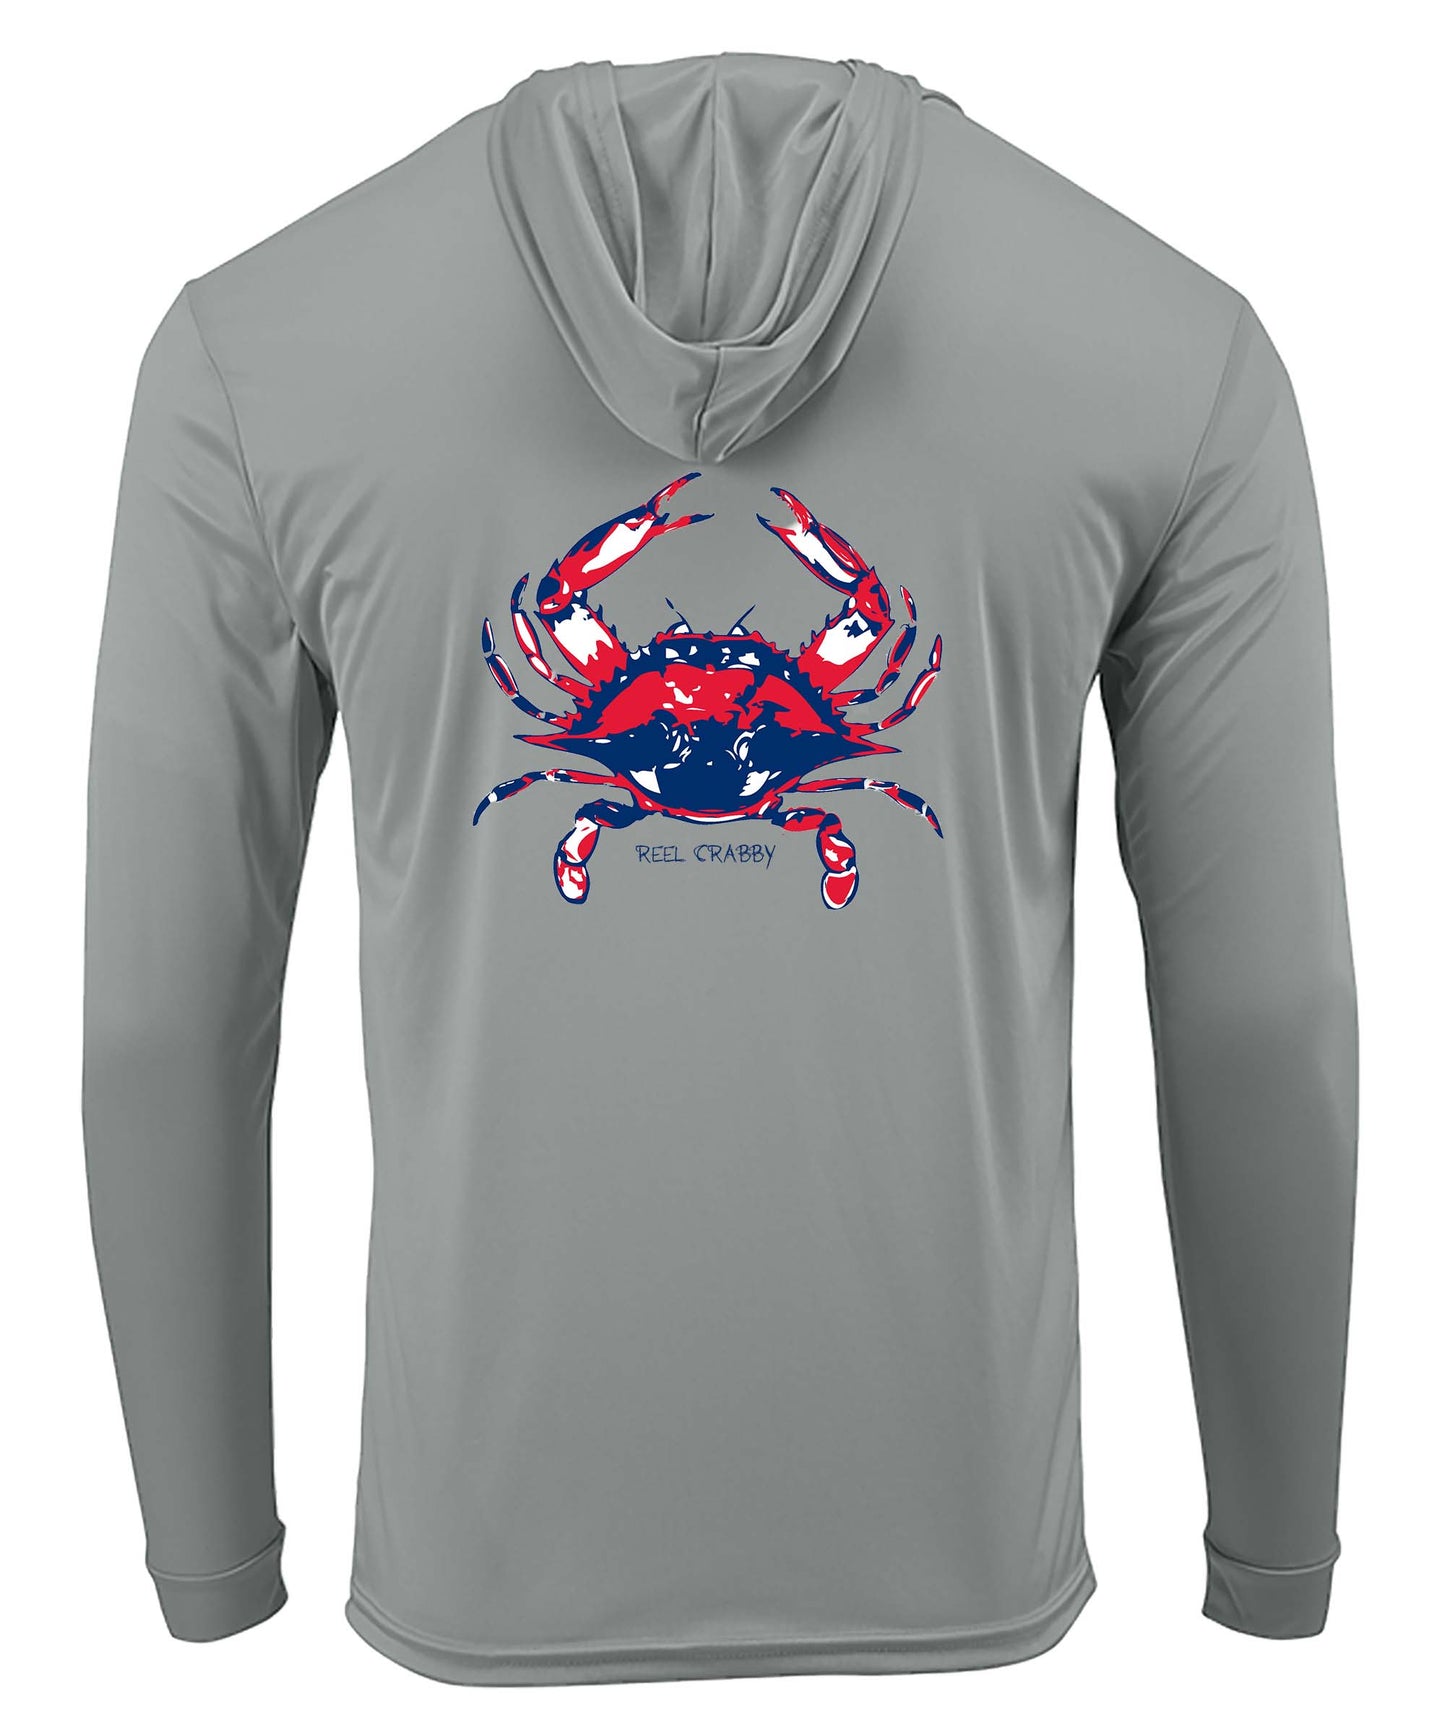 American Blue Crab -Reel Crabby Performance Hoodie Dry-fit Long Sleeve Med Gray